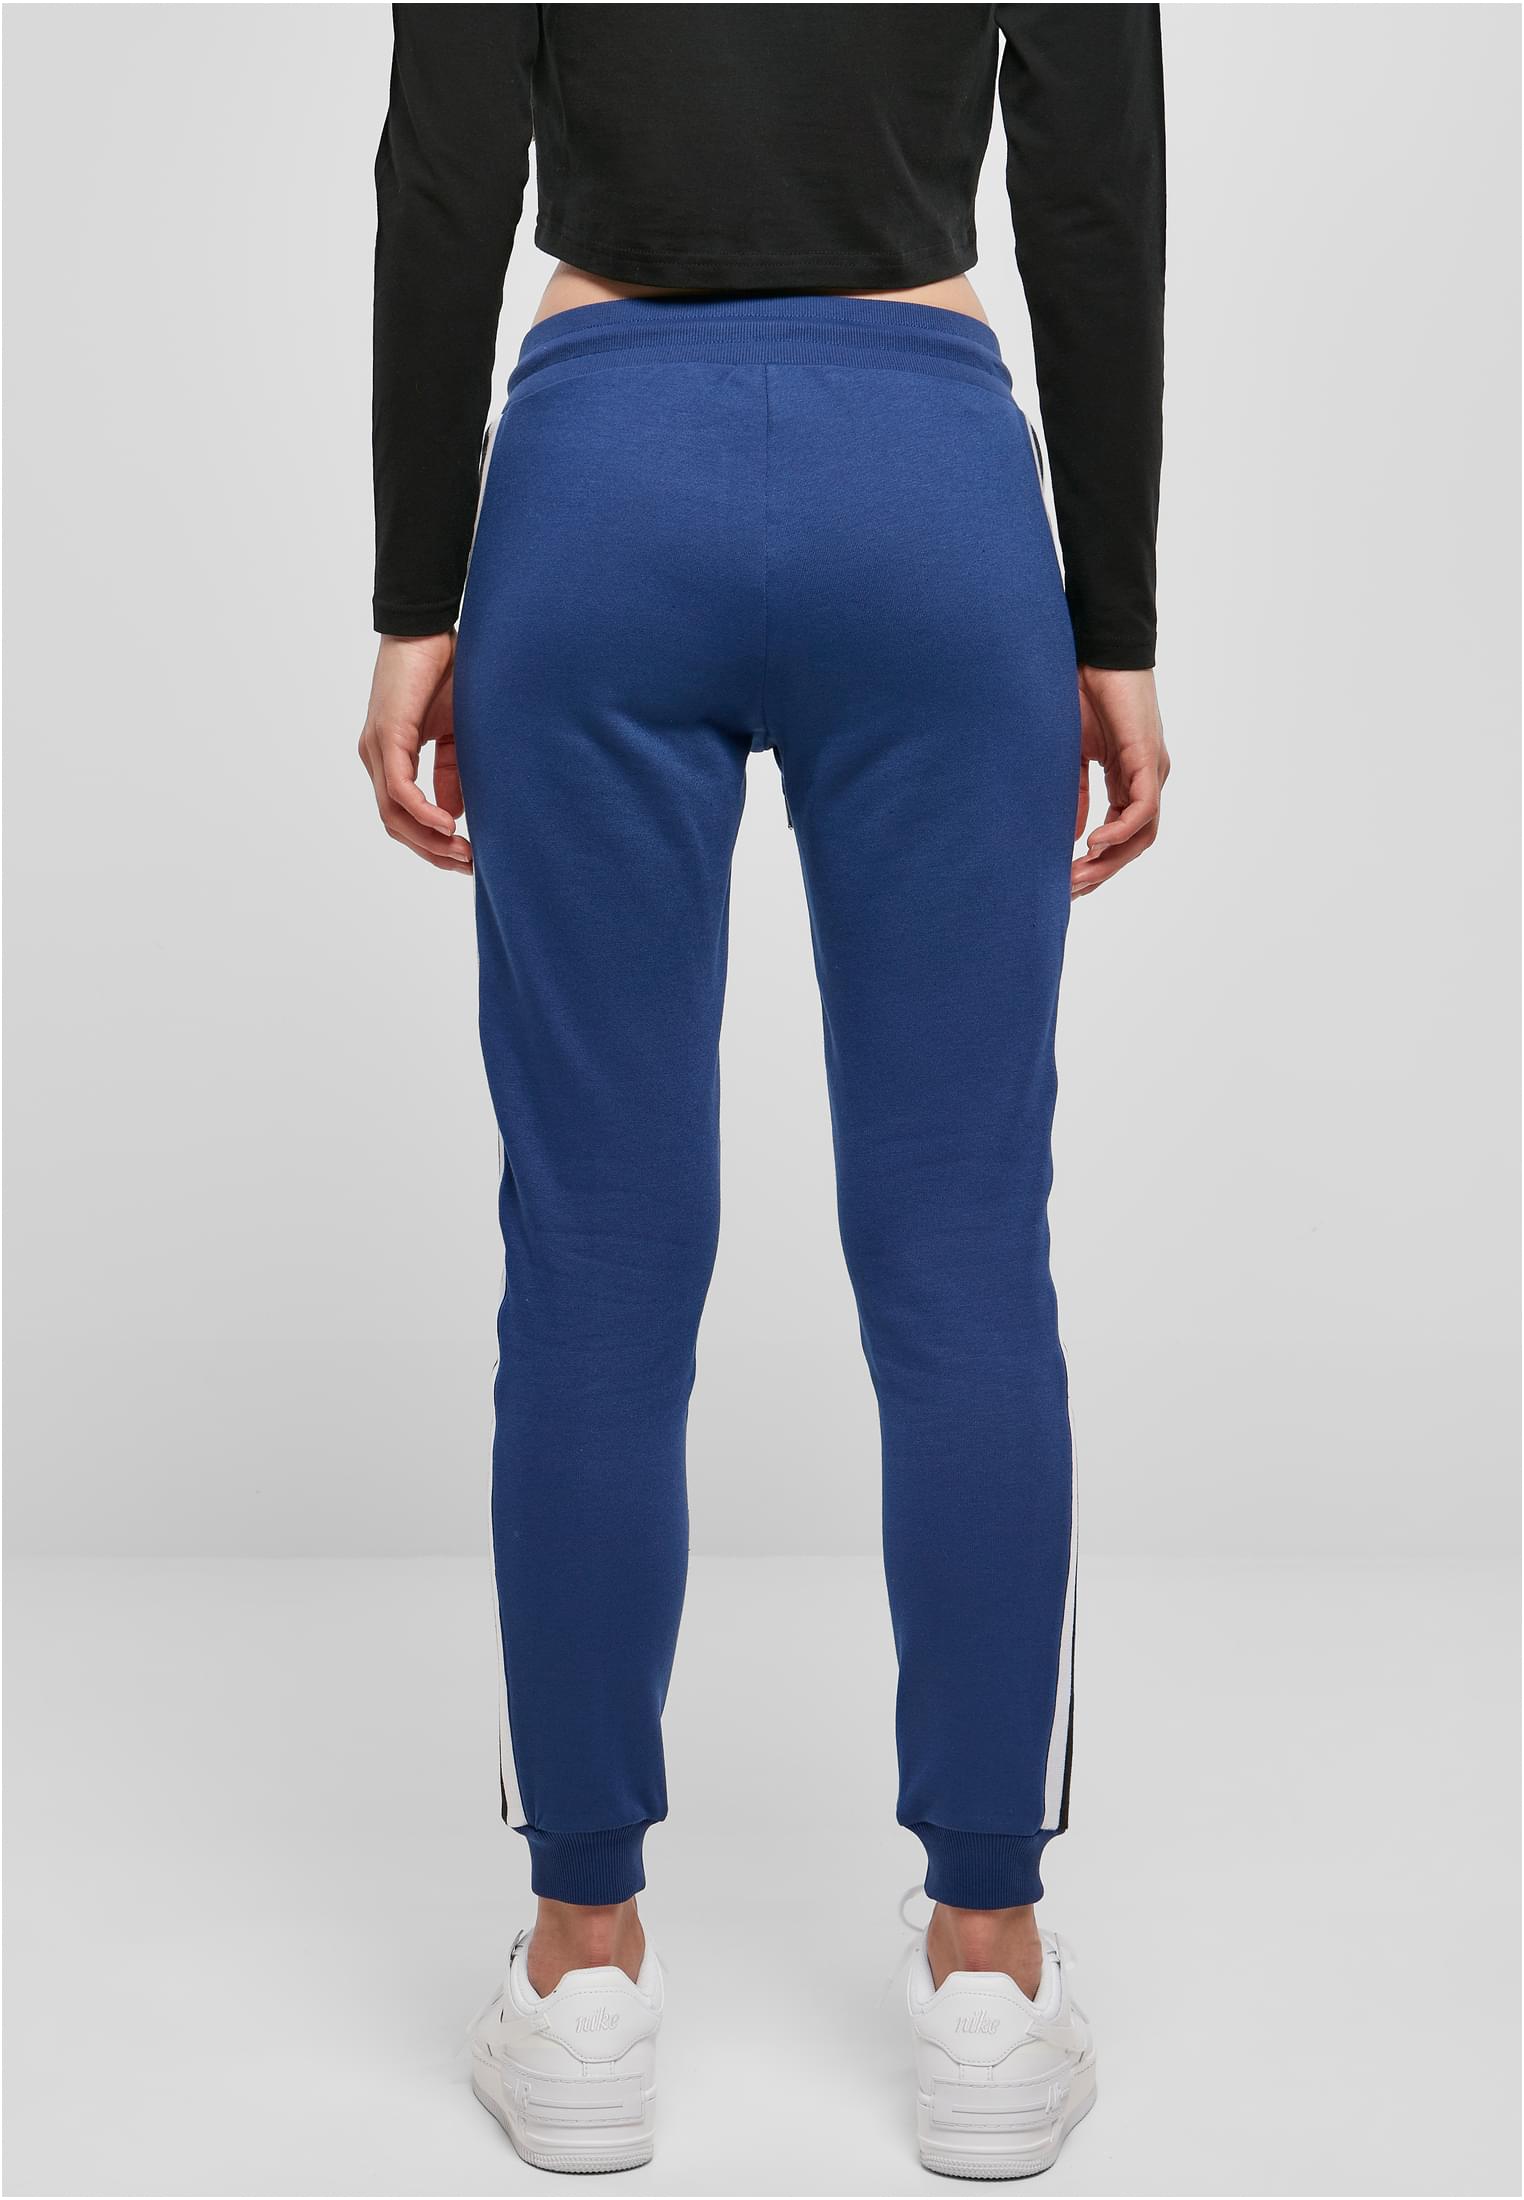 Damen Ladies College Contrast Sweatpants in Farbe spaceblue/white/black